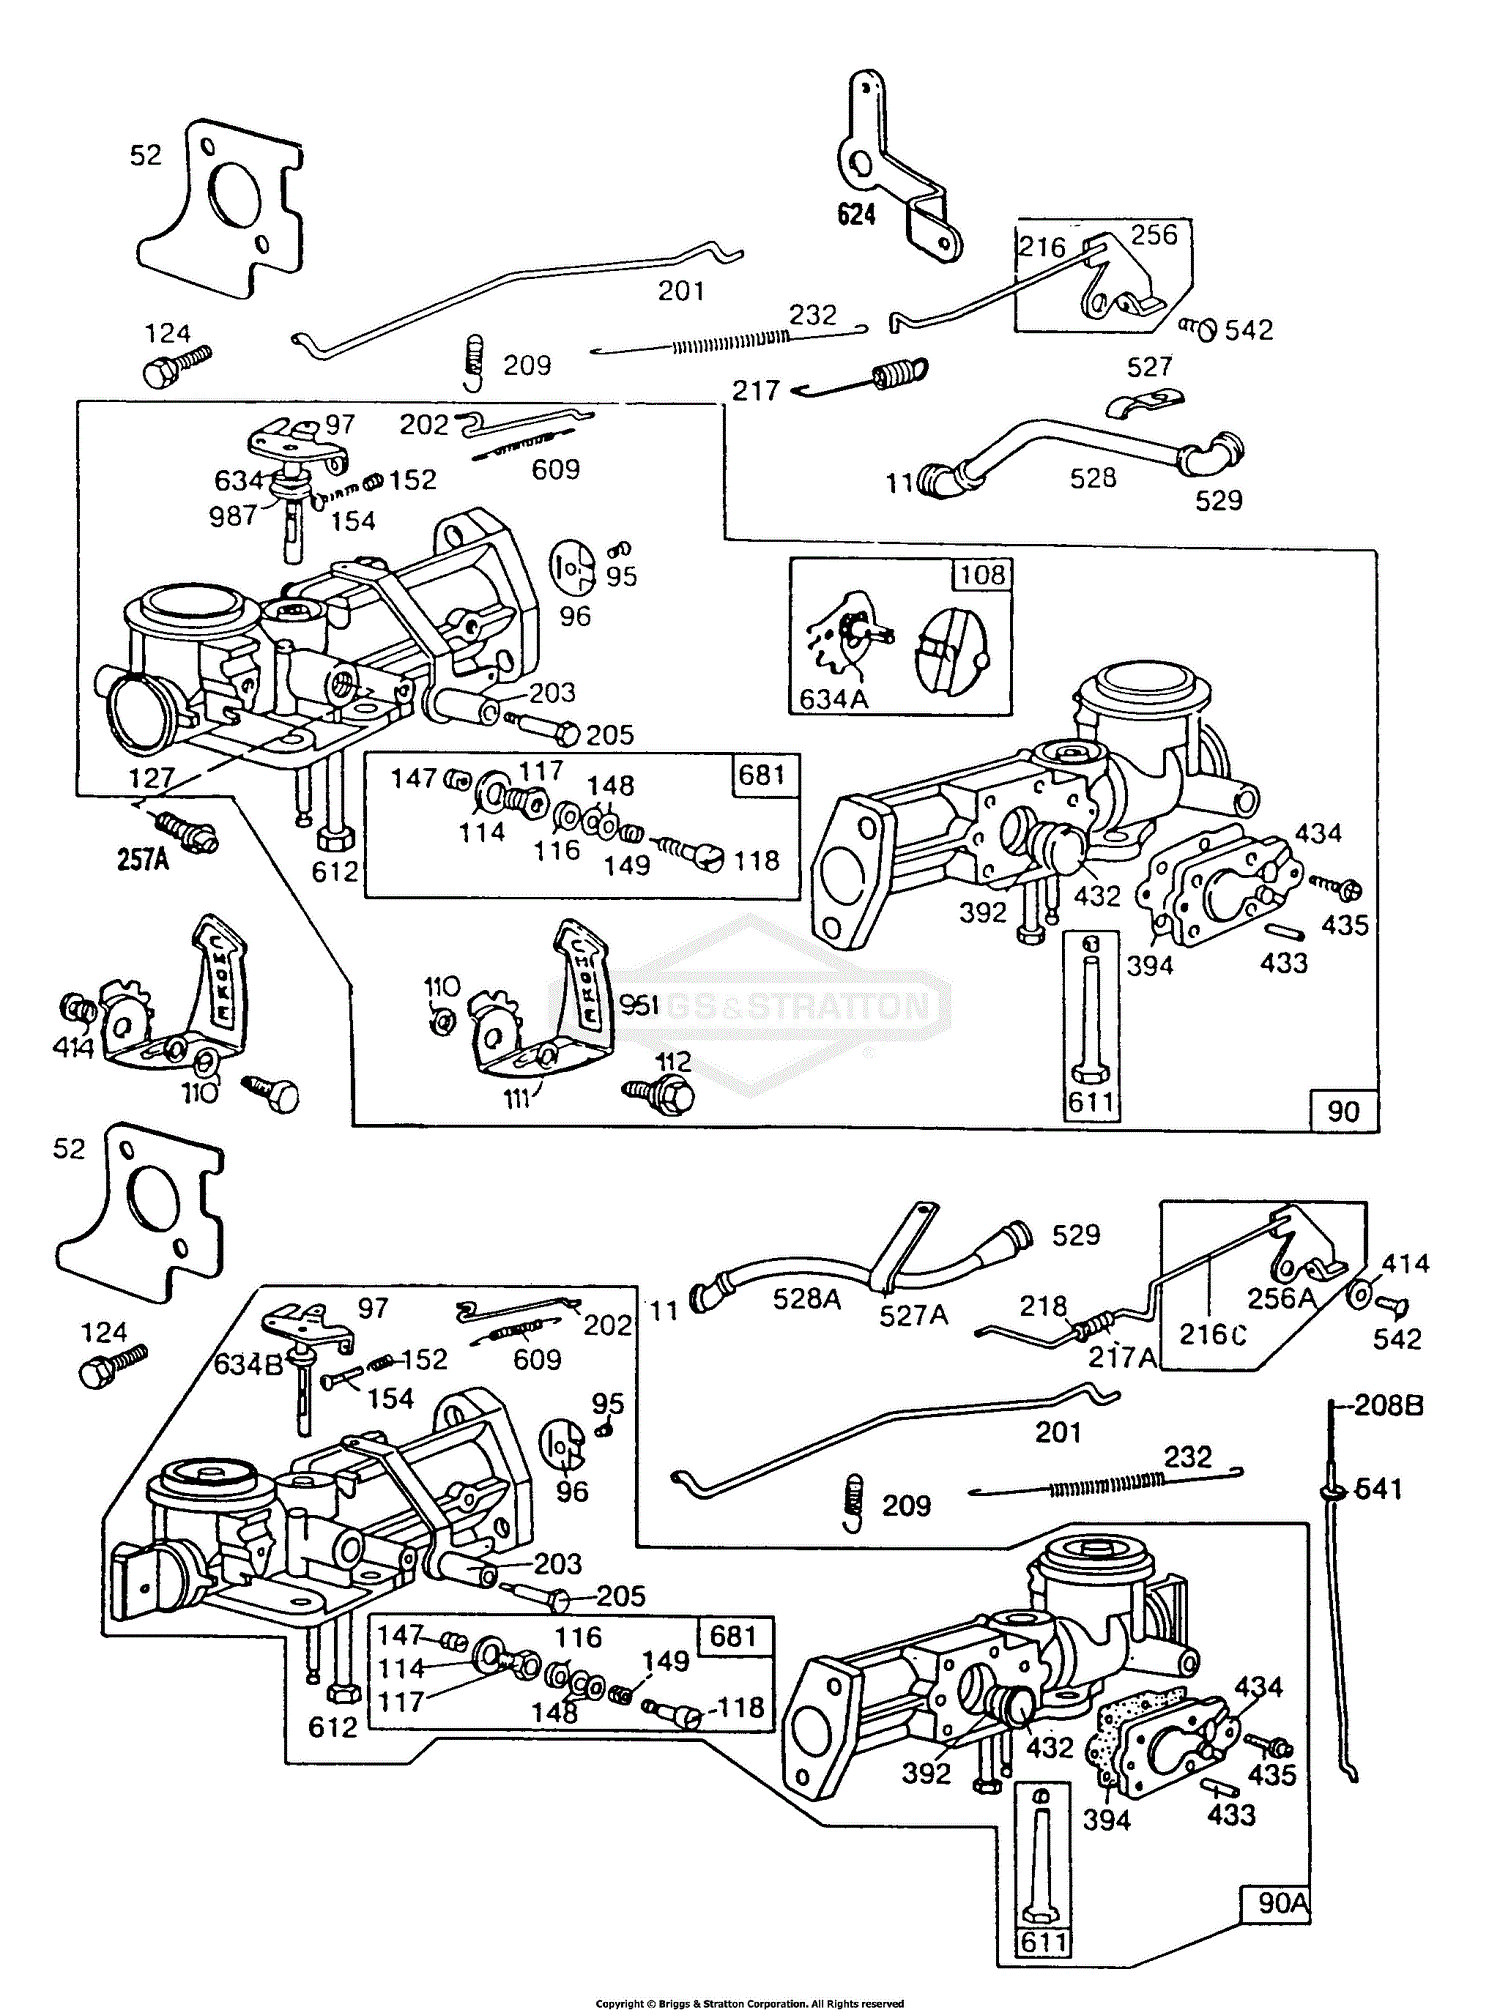 https://az417944.vo.msecnd.net/diagrams/manufacturer/briggs-stratton/briggs-stratton-engine/100000-19z999-series/112200-to-112299/112201-0610-01/carburetor-assemblies/diagram.gif